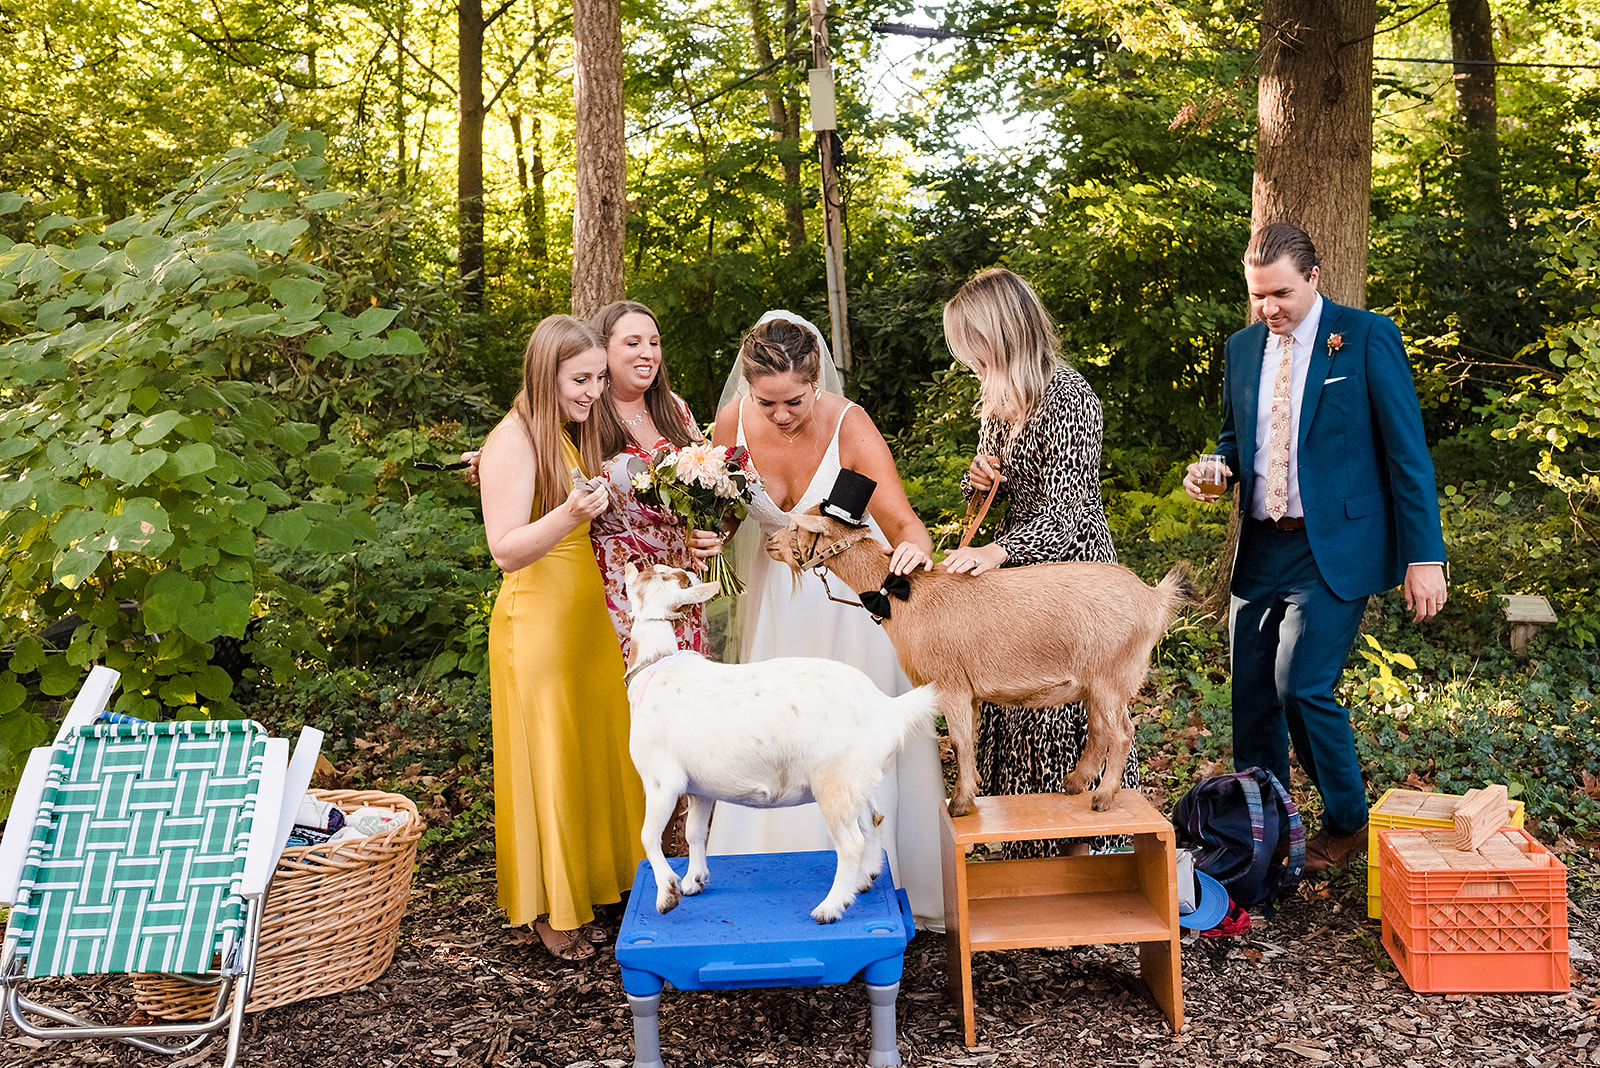 Awbury Arboretum wedding reception cocktail hour with goats